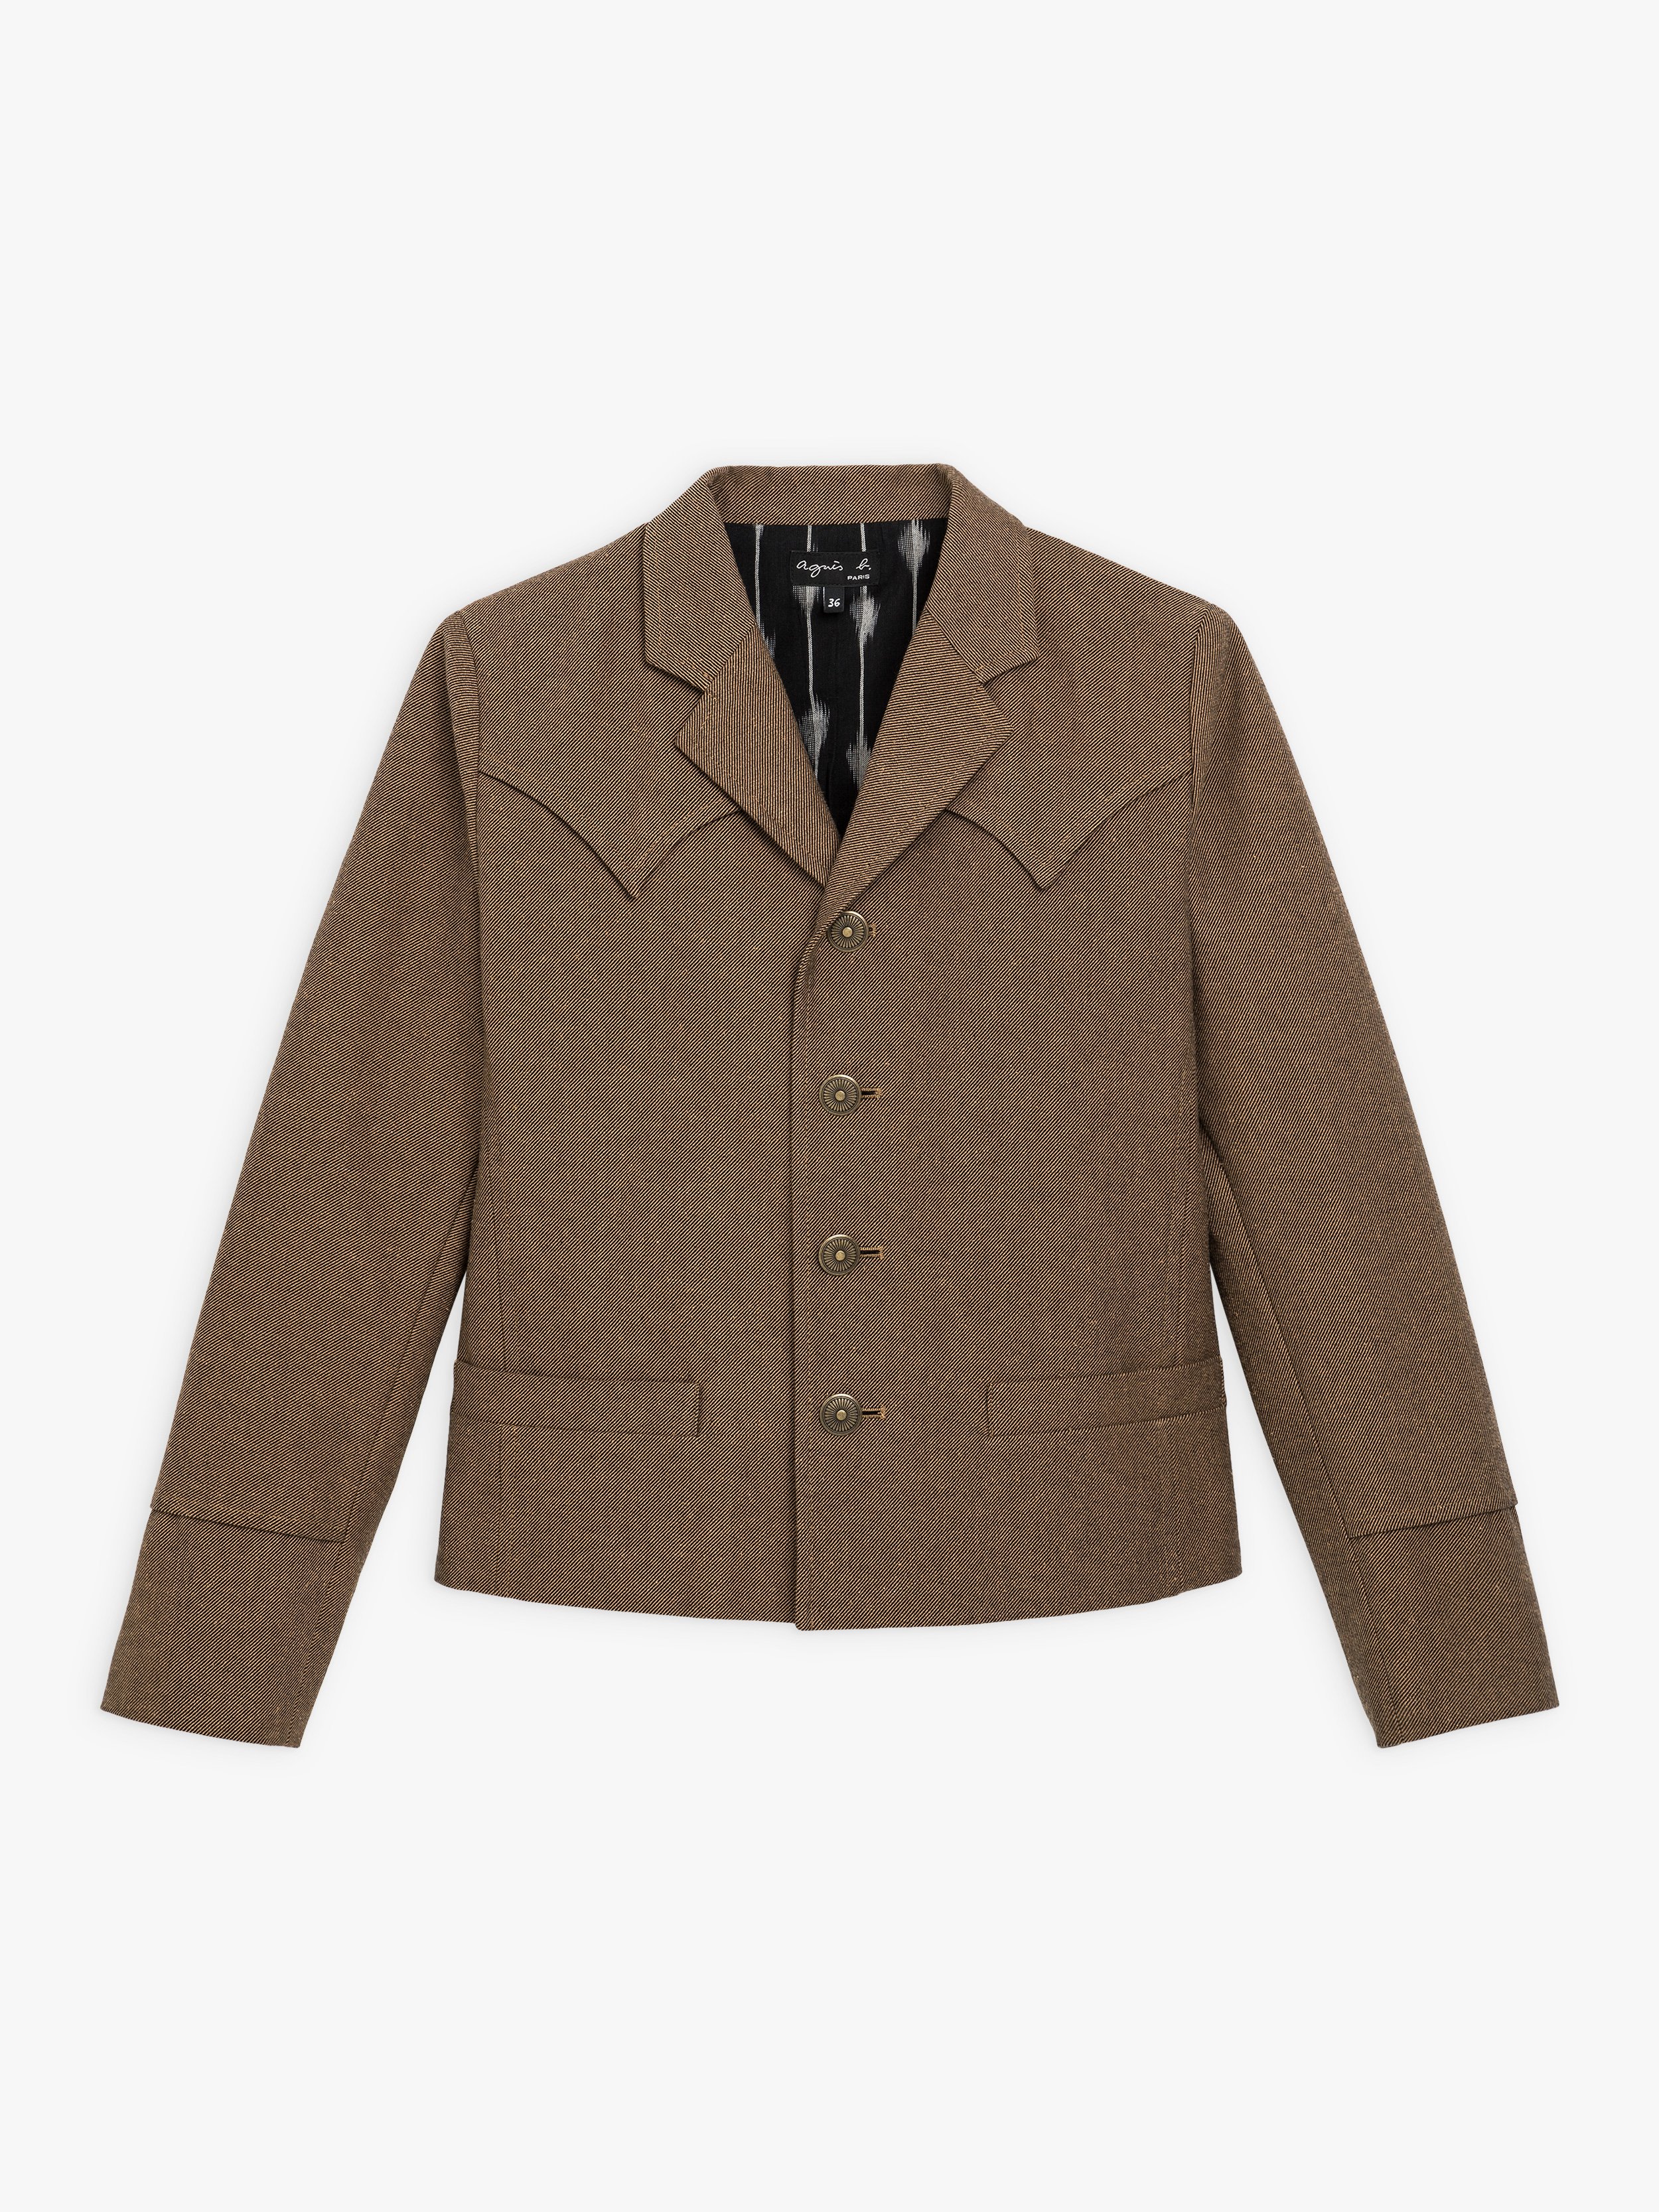 90s agnes b. western tailored jacket-eastgate.mk